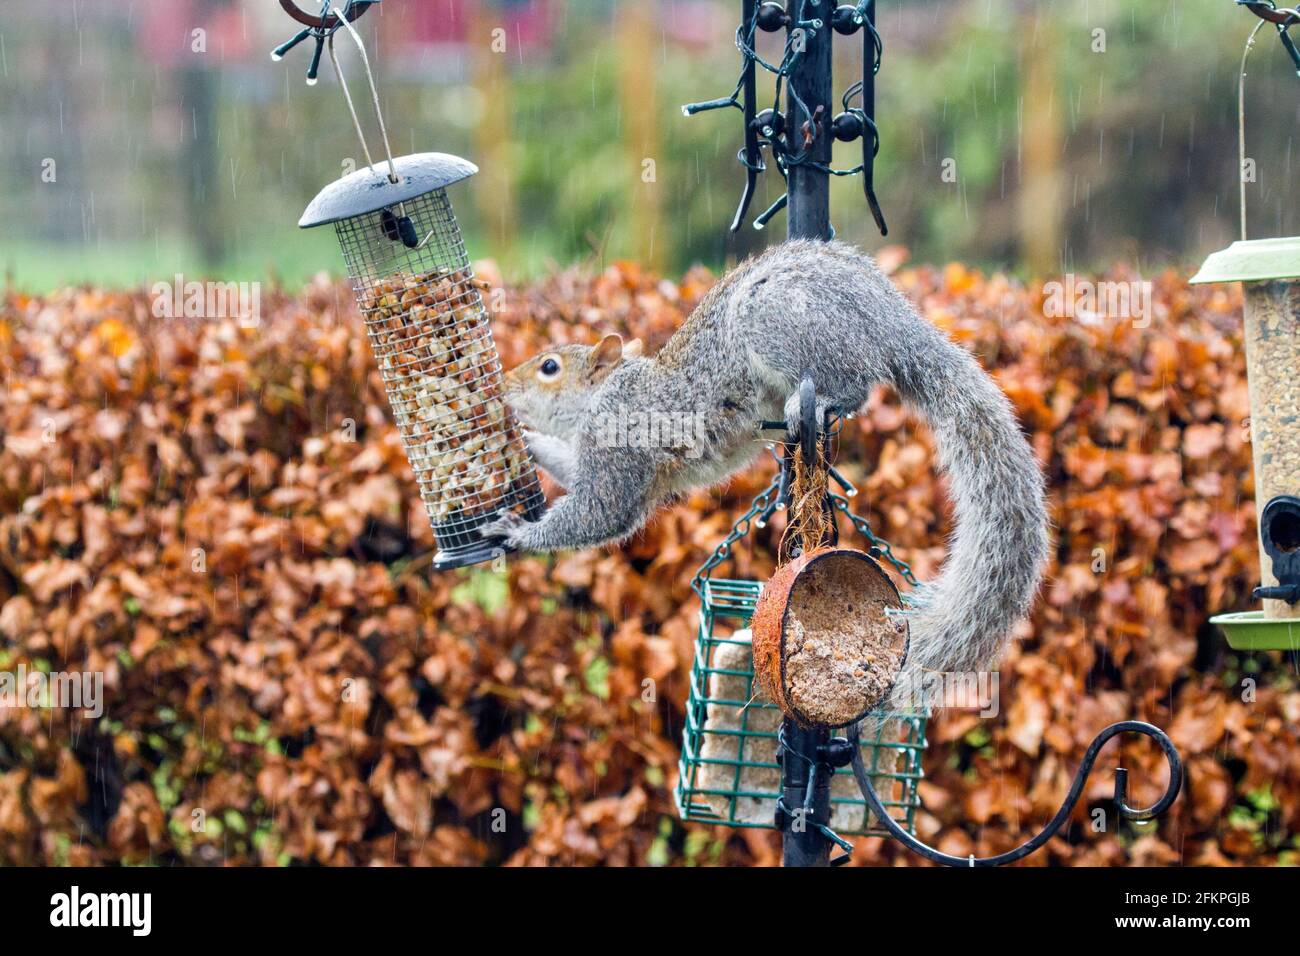 Grey Squirrel  Sciuridae  feeding taking food from a bird feeder in an English garden Stock Photo